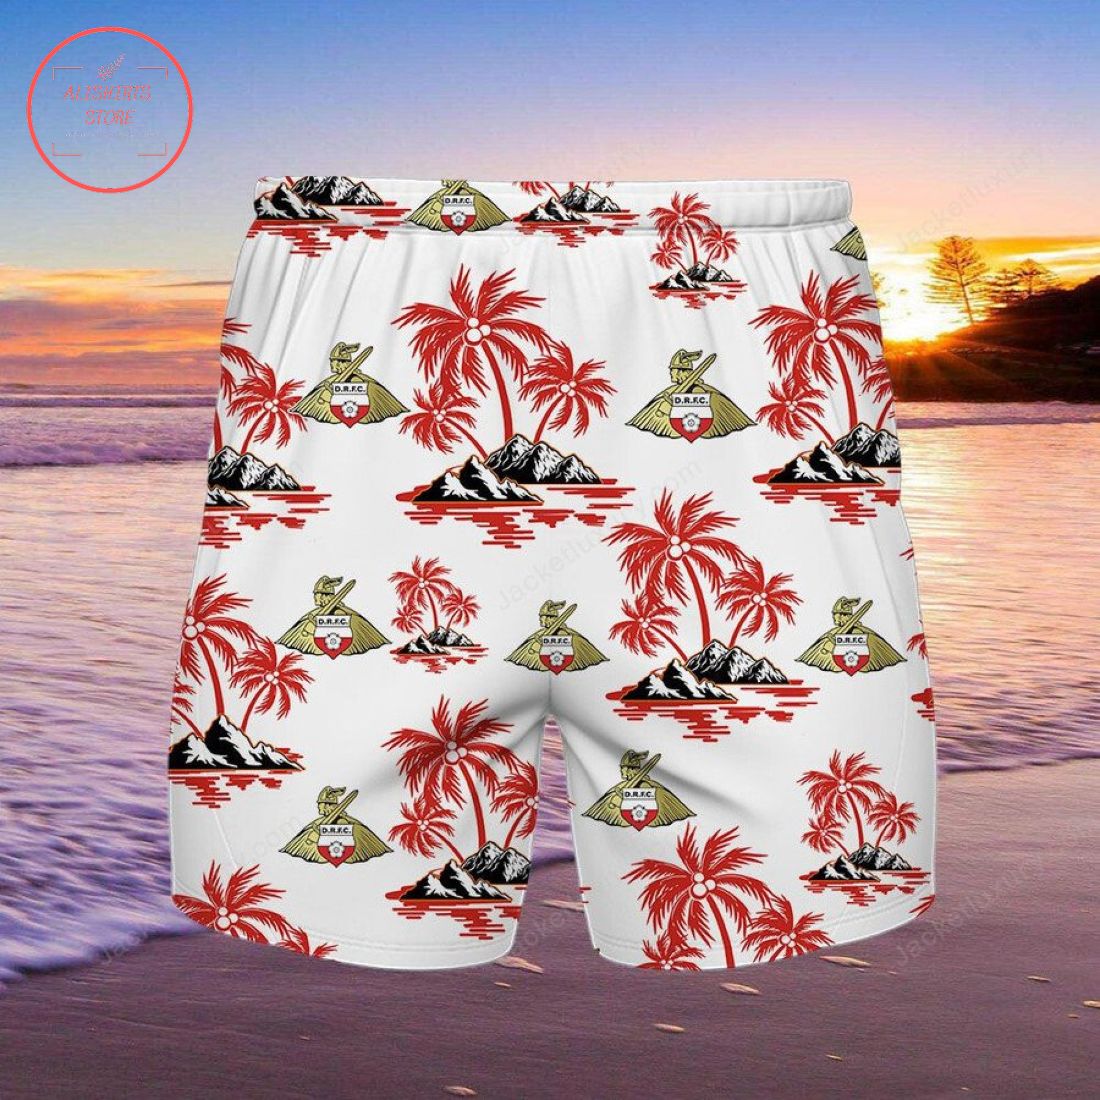 Doncaster Rovers FC Hawaiian Shirt and Beach Shorts